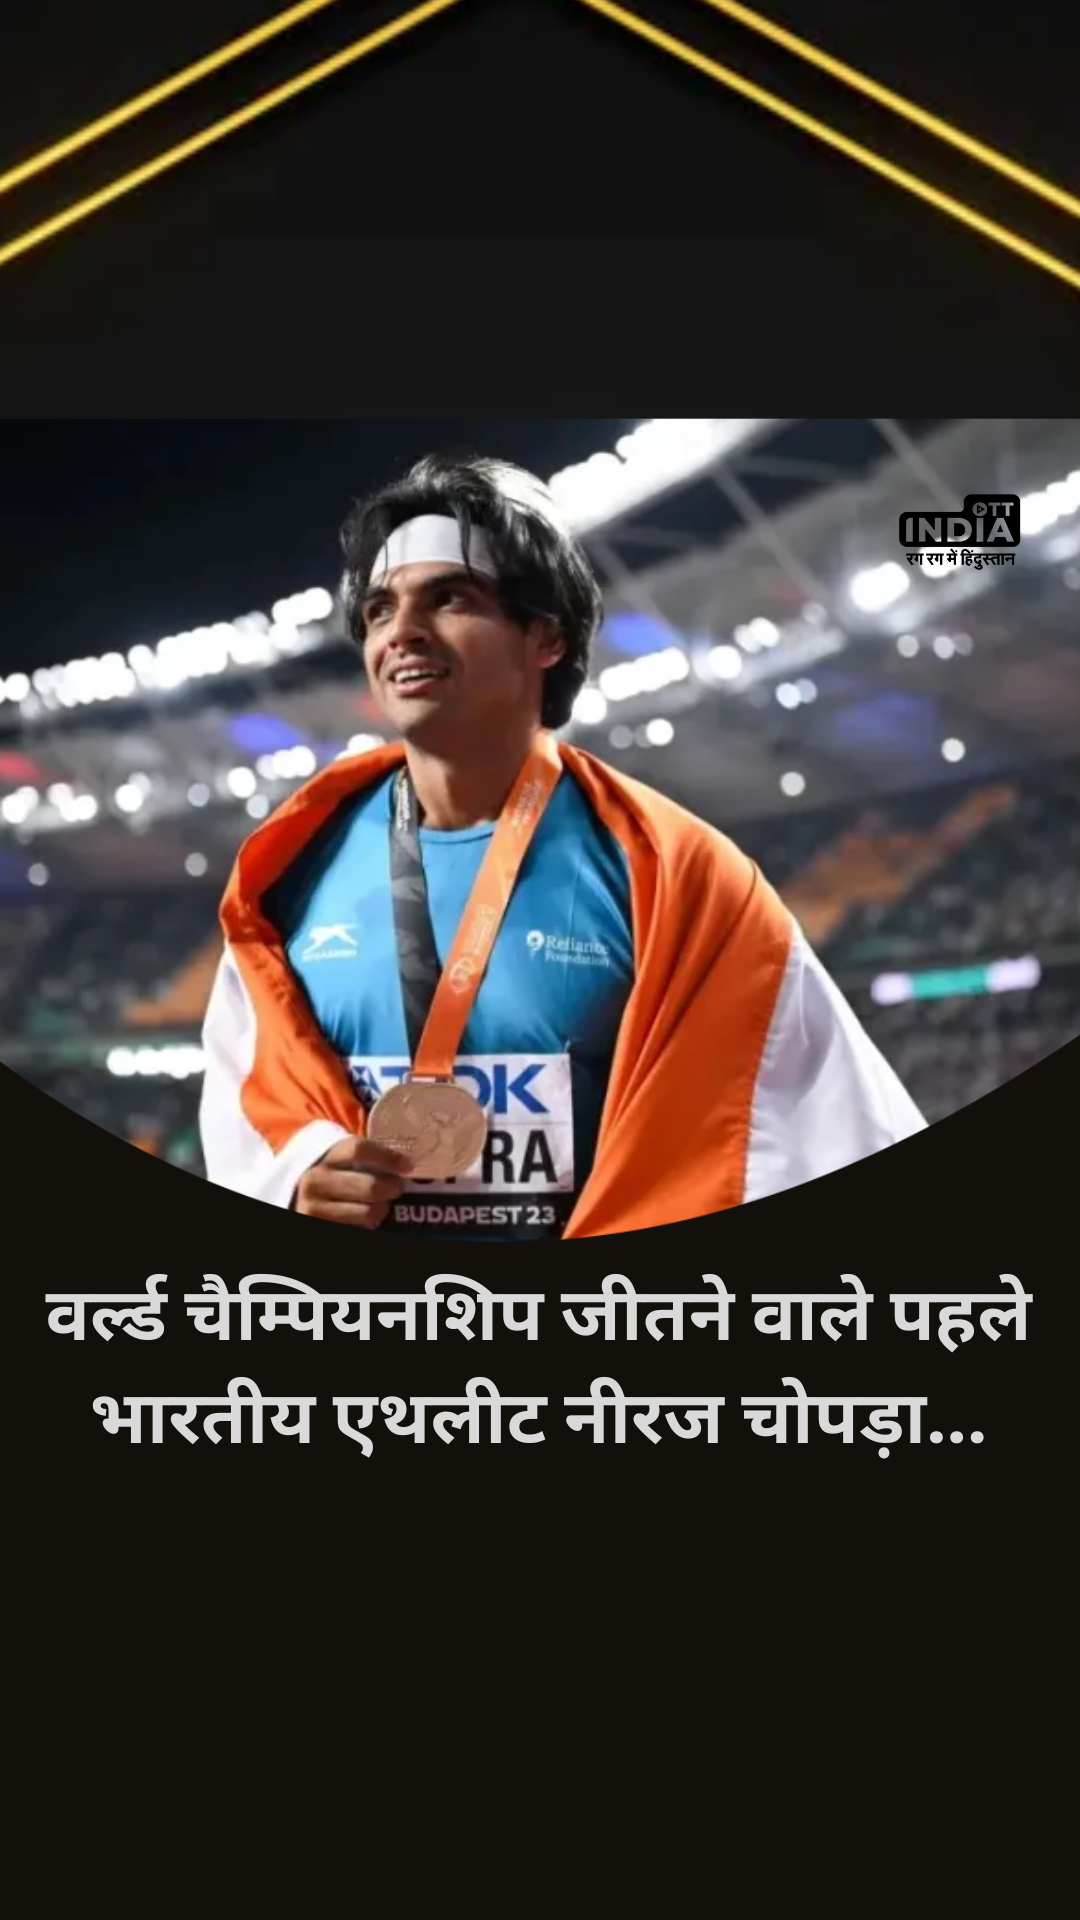 Neeraj Chopra Gold Medal: नीरज चोपड़ा ने रचा इतिहास, वर्ल्ड चैम्पियनशिप जीतने वाले पहले भारतीय एथलीट बने